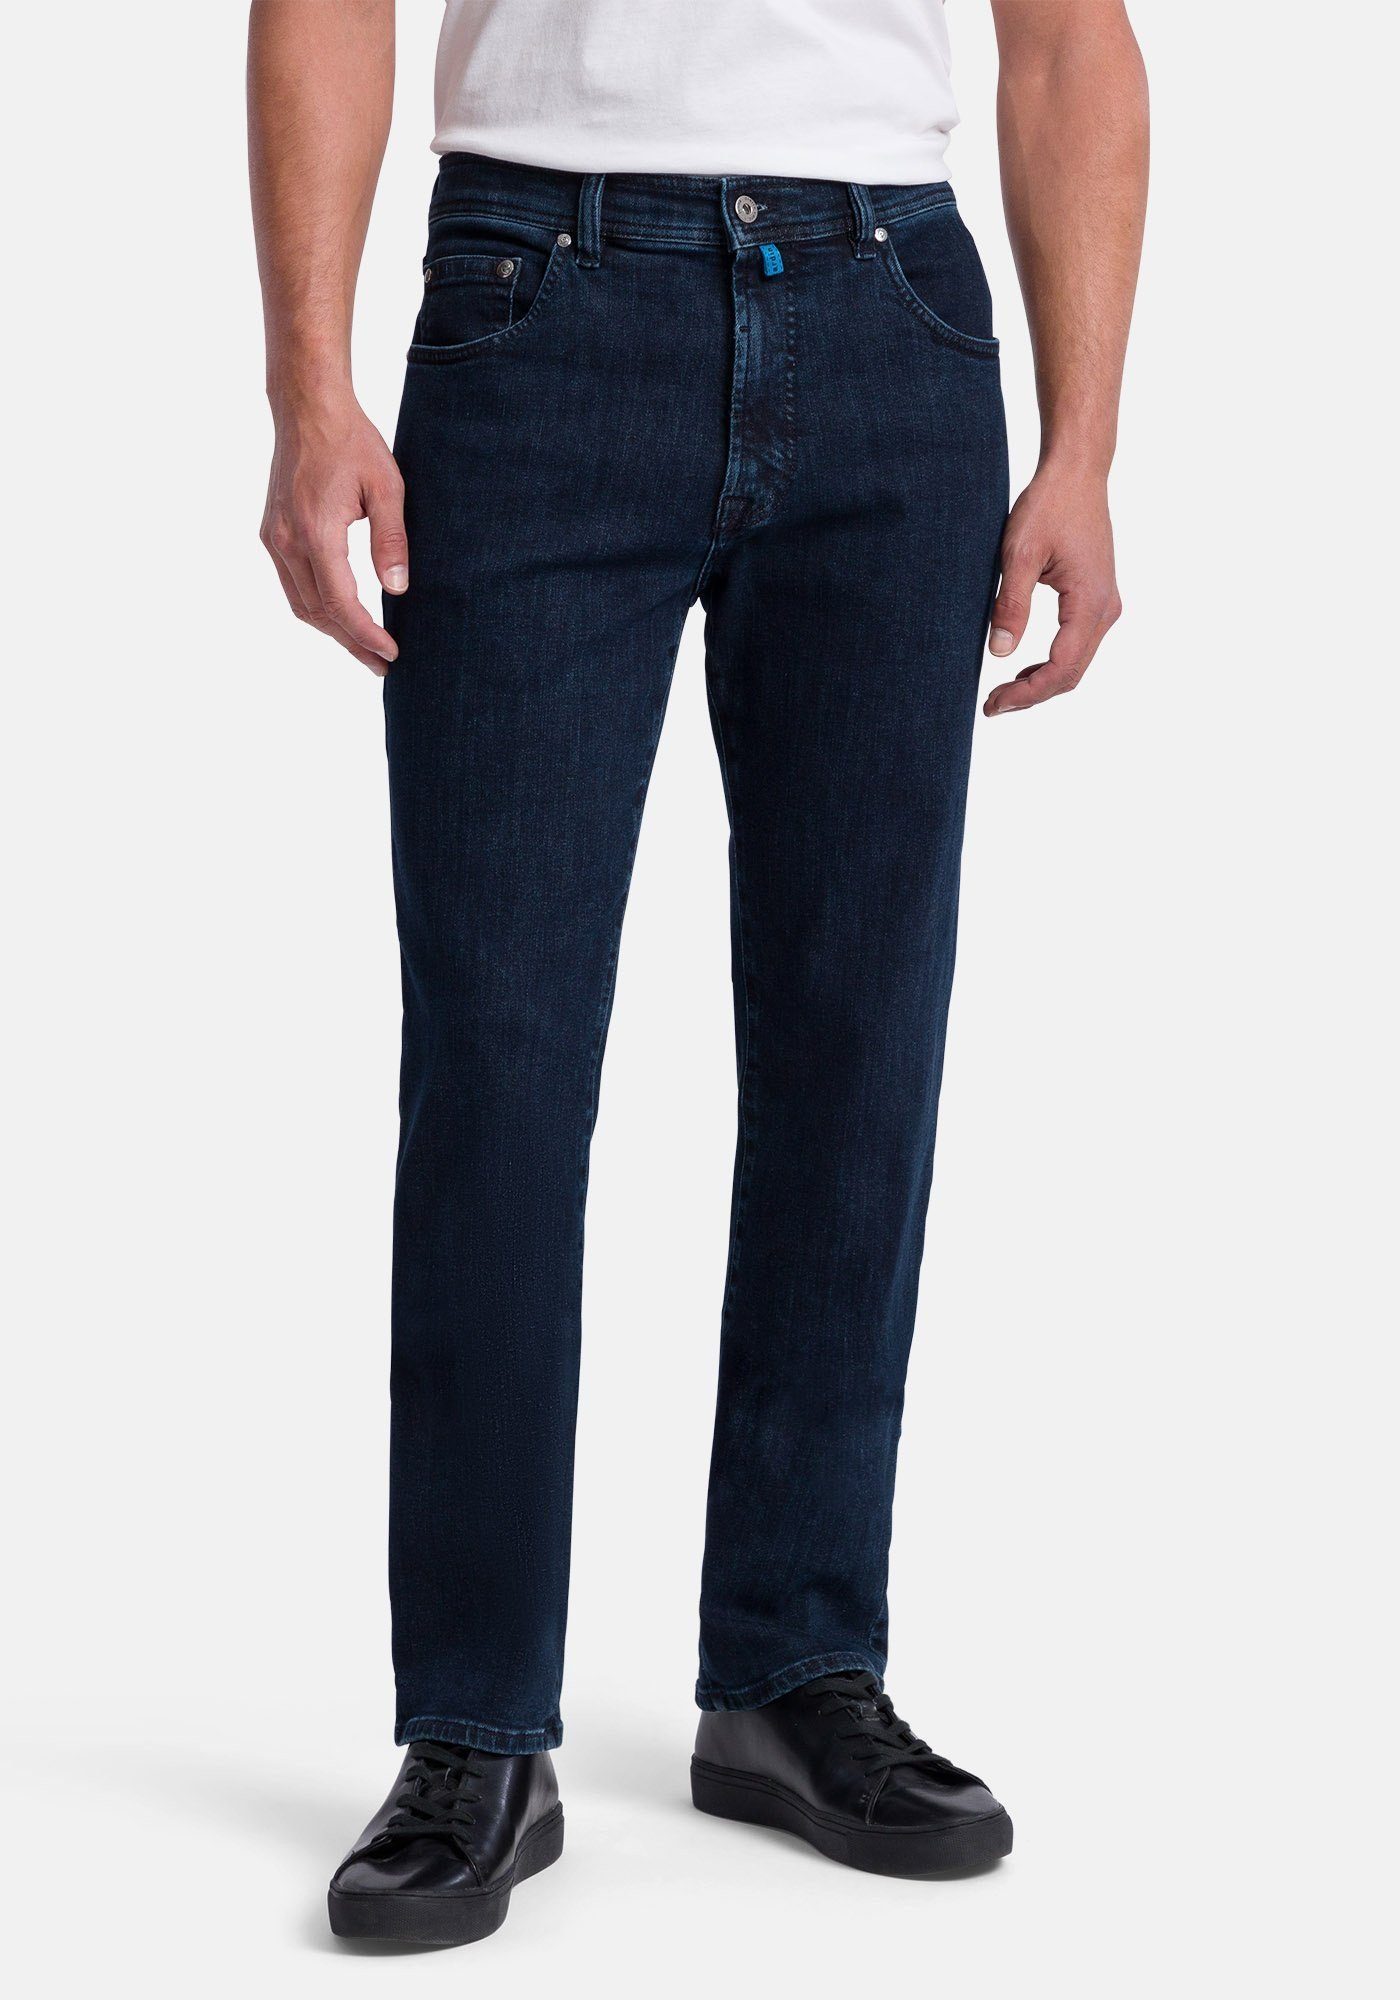 Pierre Cardin 5-Pocket-Jeans Dijon Comfort Fit Green Rivet Stretch Denim dark blue stonewash